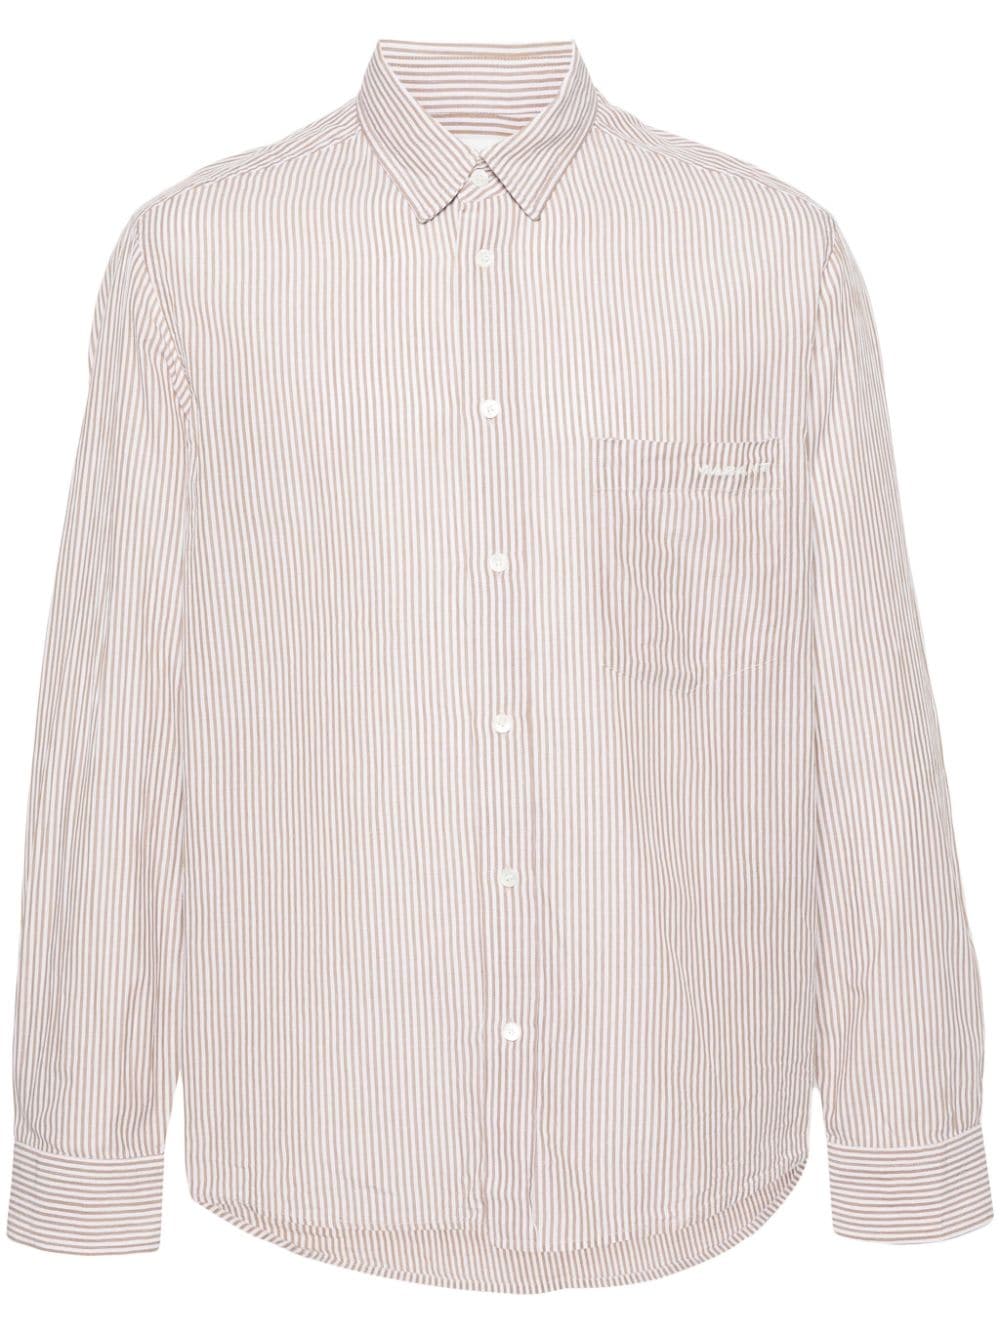 Jasolo striped cotton shirt<BR/><BR/><BR/>